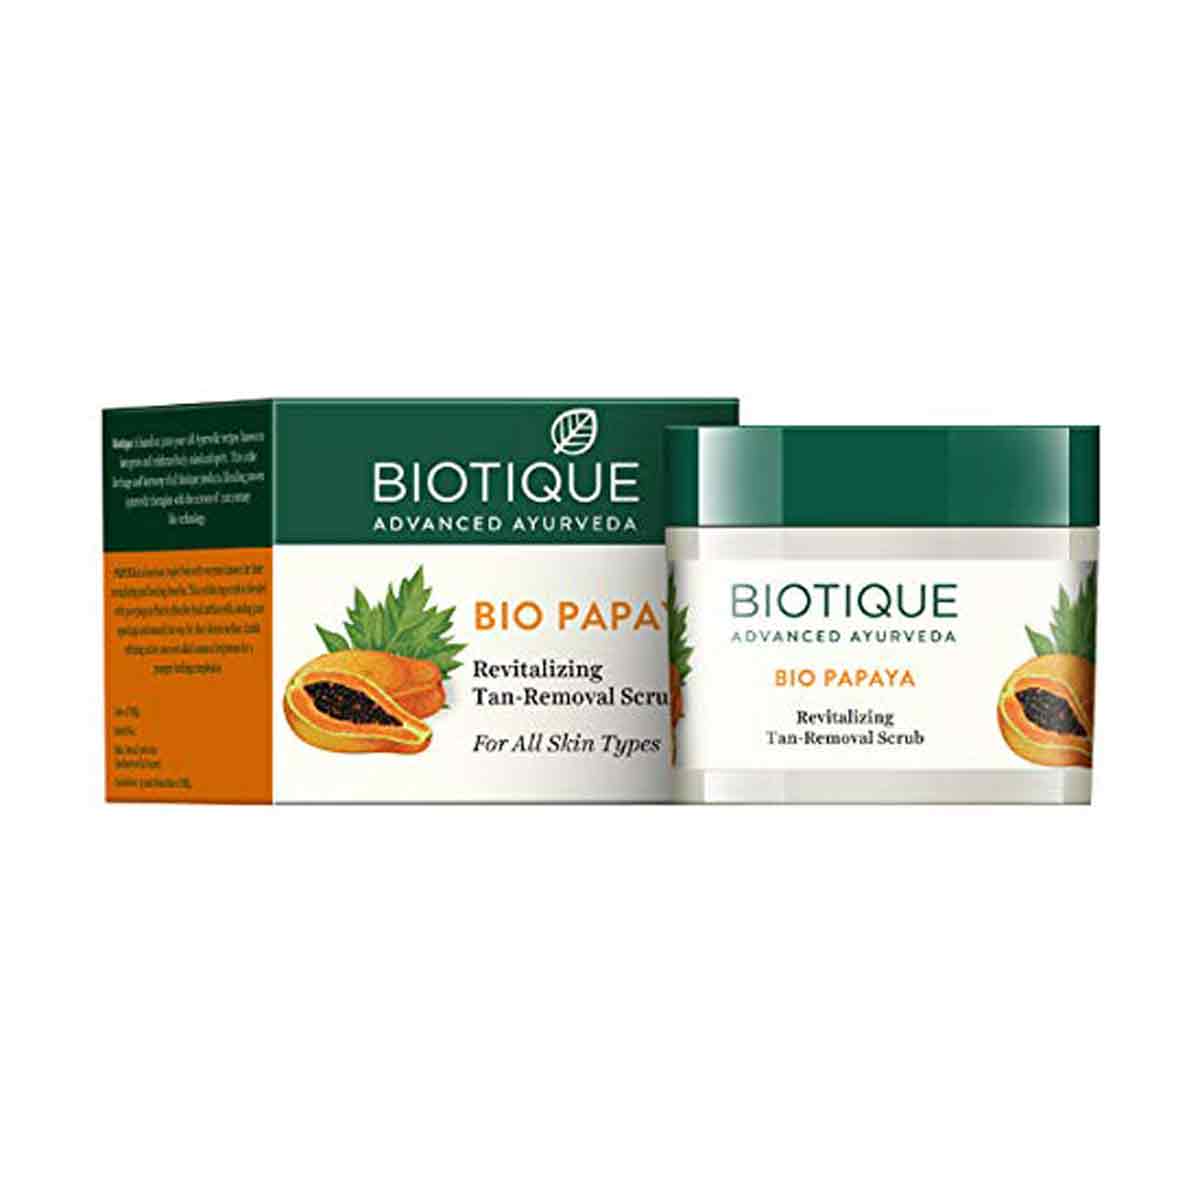 Biotique Bio Papaya Tan Removal Scrub, Expiry Date 11-2022